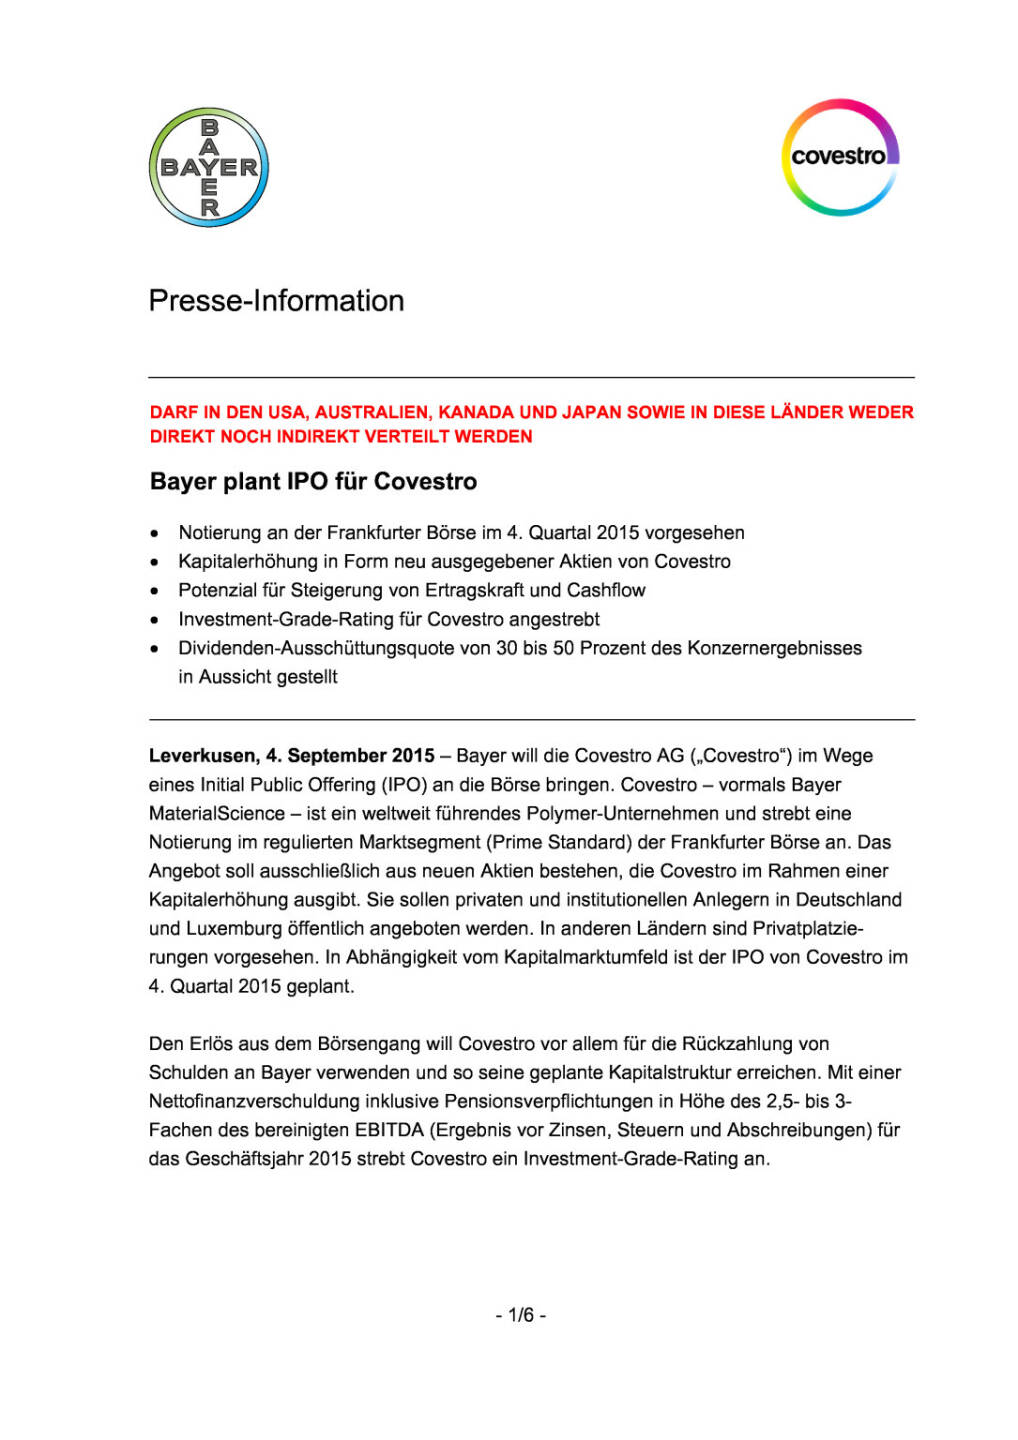 Bayer plant IPO für Covestro, Seite 1/6, komplettes Dokument unter http://boerse-social.com/static/uploads/file_349_bayer_plant_ipo_fur_covestro.pdf